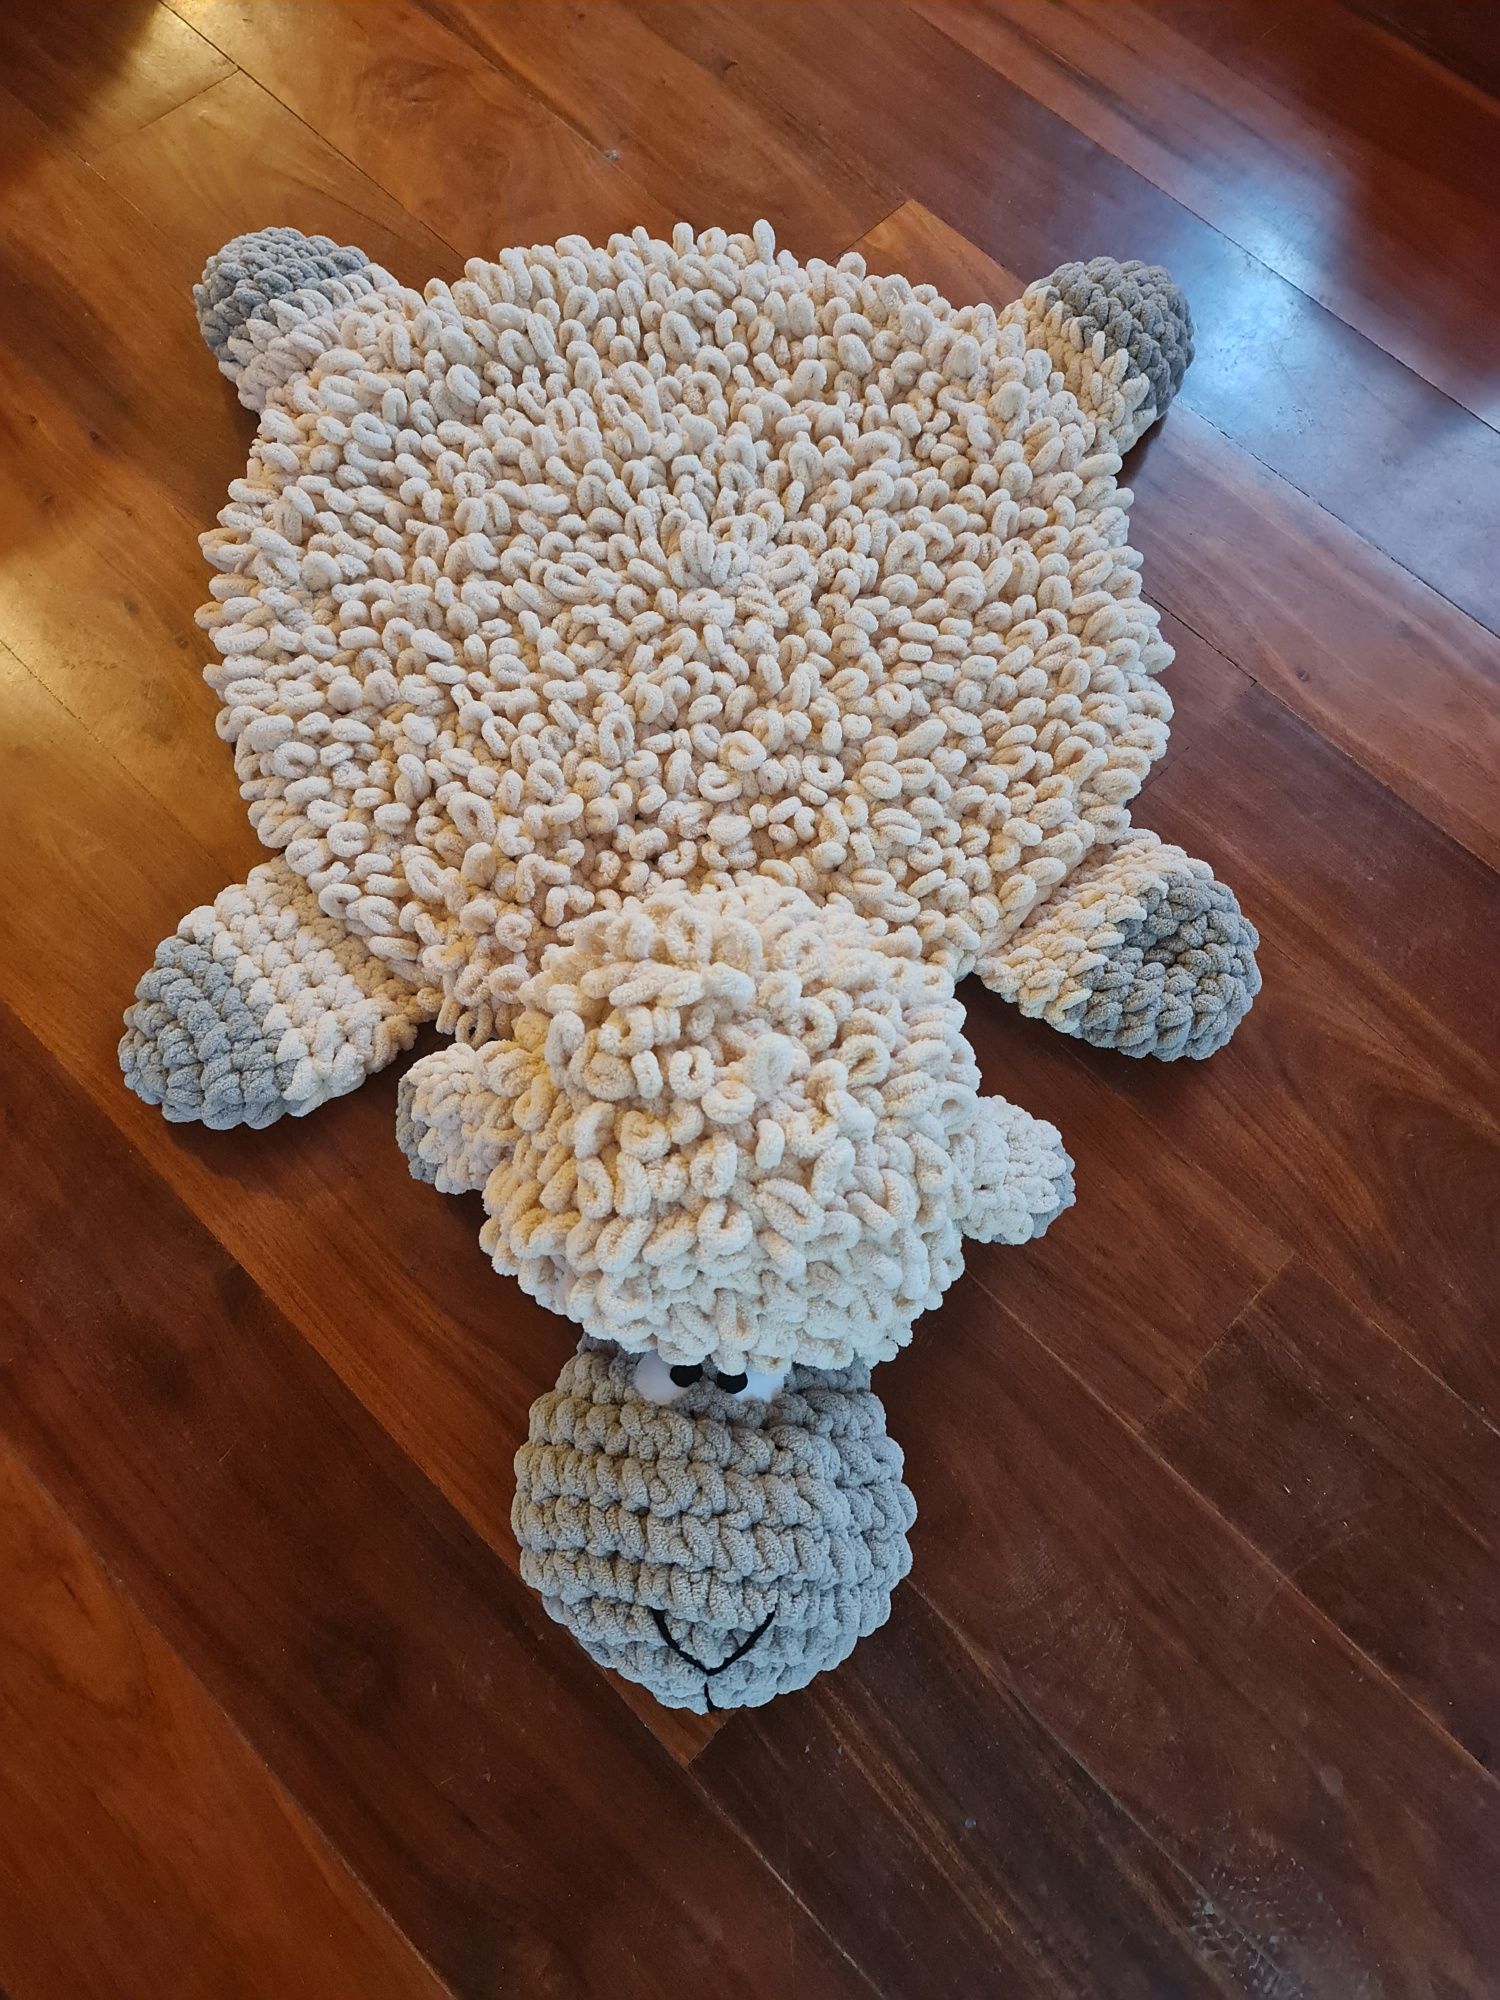 Декорация за детска стая - плетено килимче "Овца"